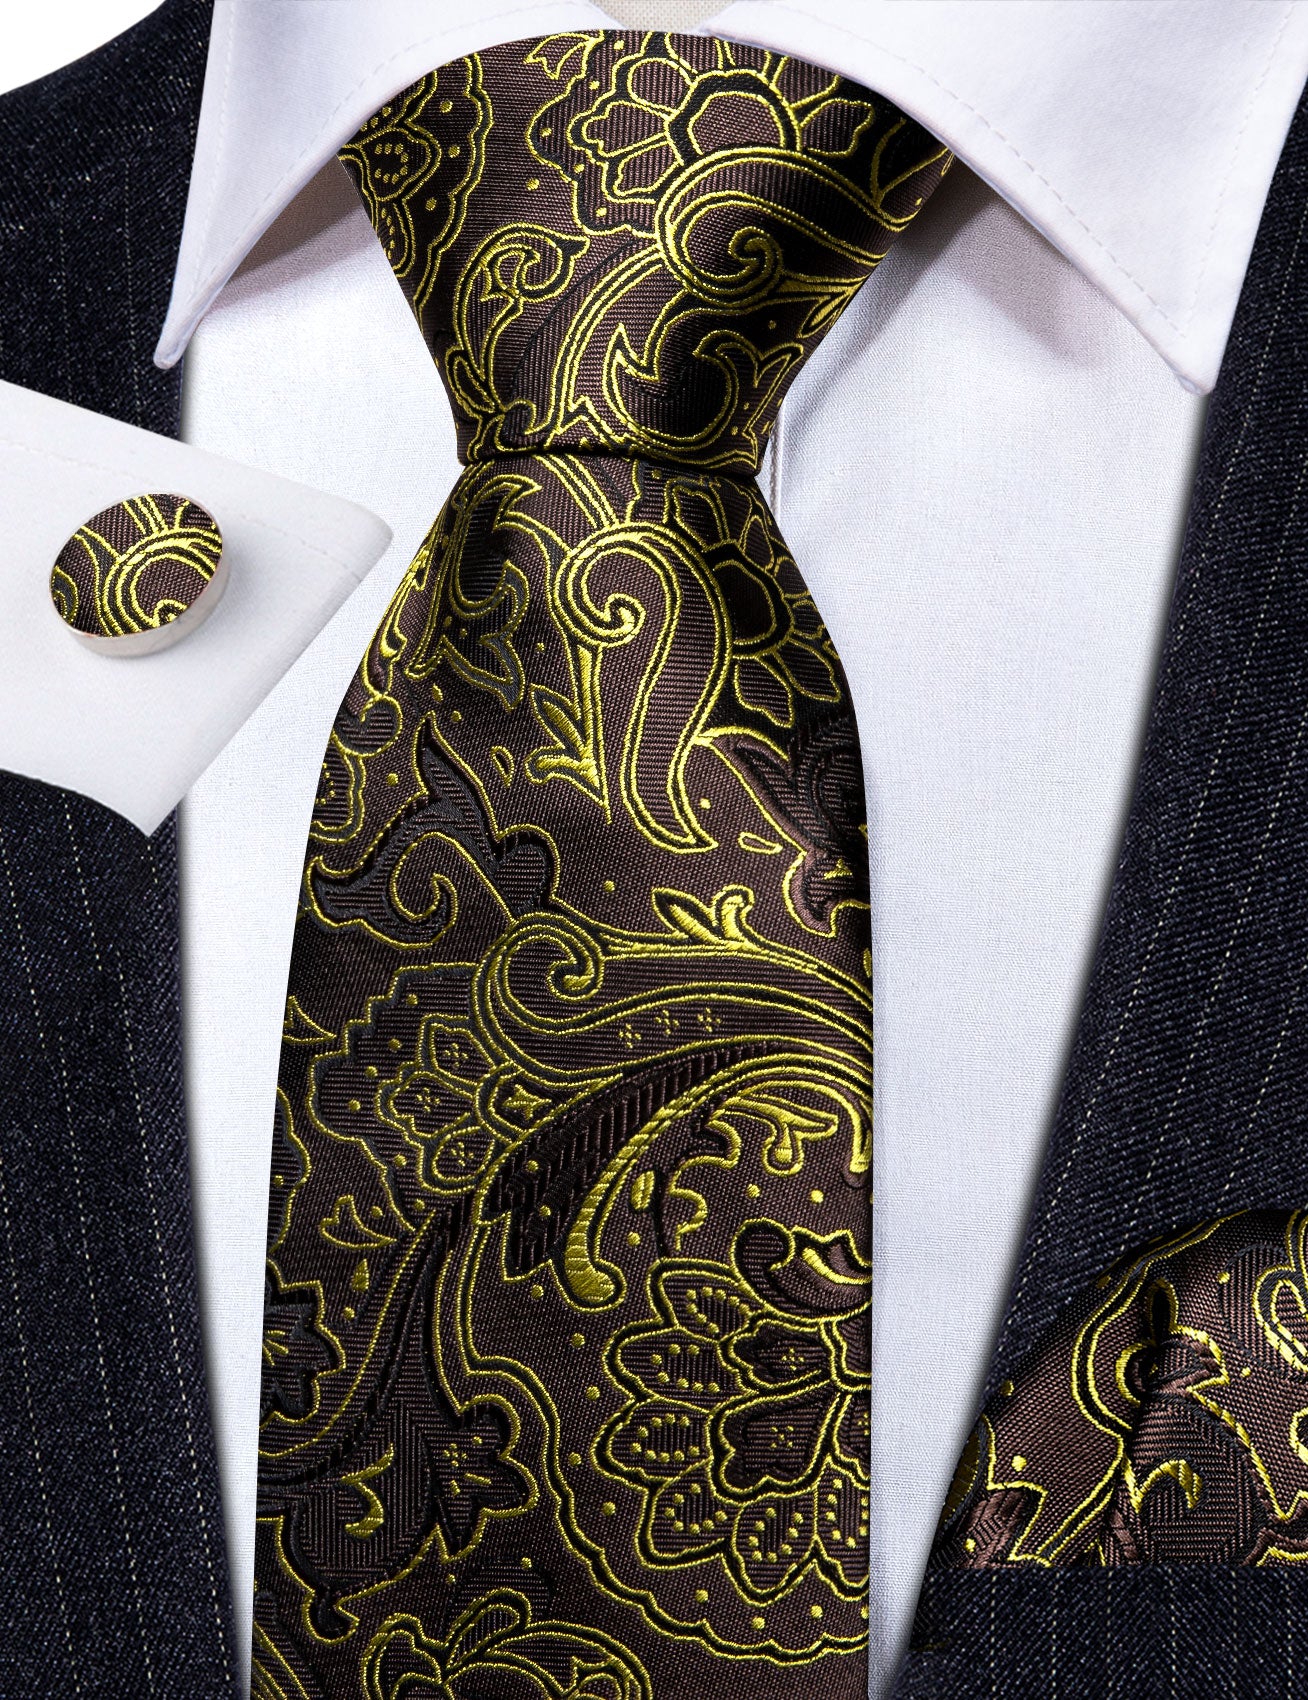 New Brown Gold Paisley Tie Handkerchief Cufflinks Set